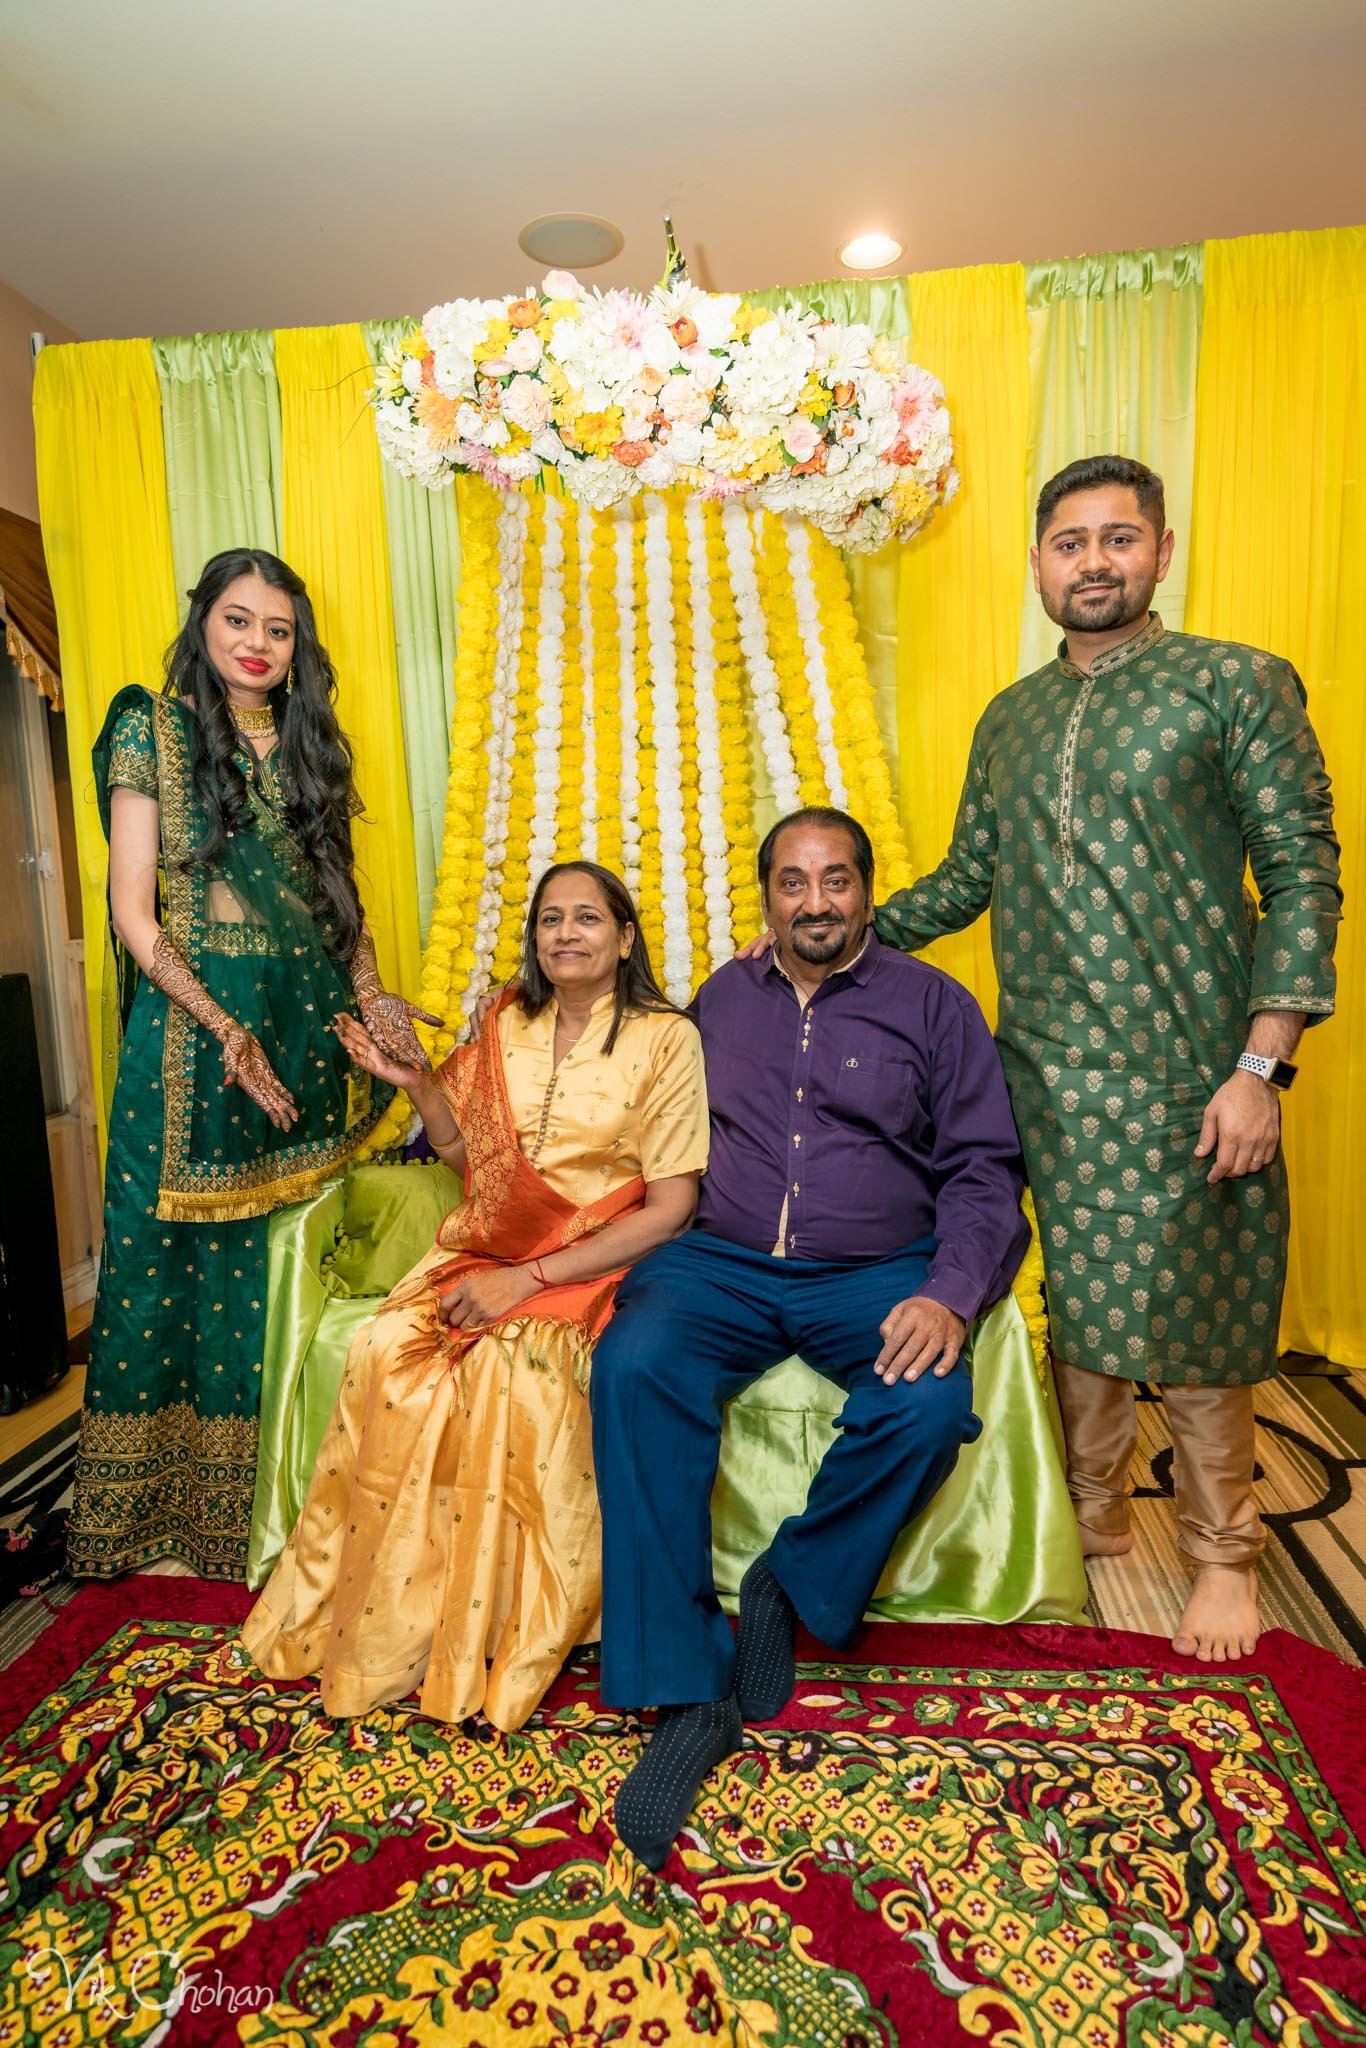 2022-02-03-Hely-&-Parth-Mendi-Indian-Wedding-Vik-Chohan-Photography-Photo-Booth-Social-Media-VCP-203.jpg